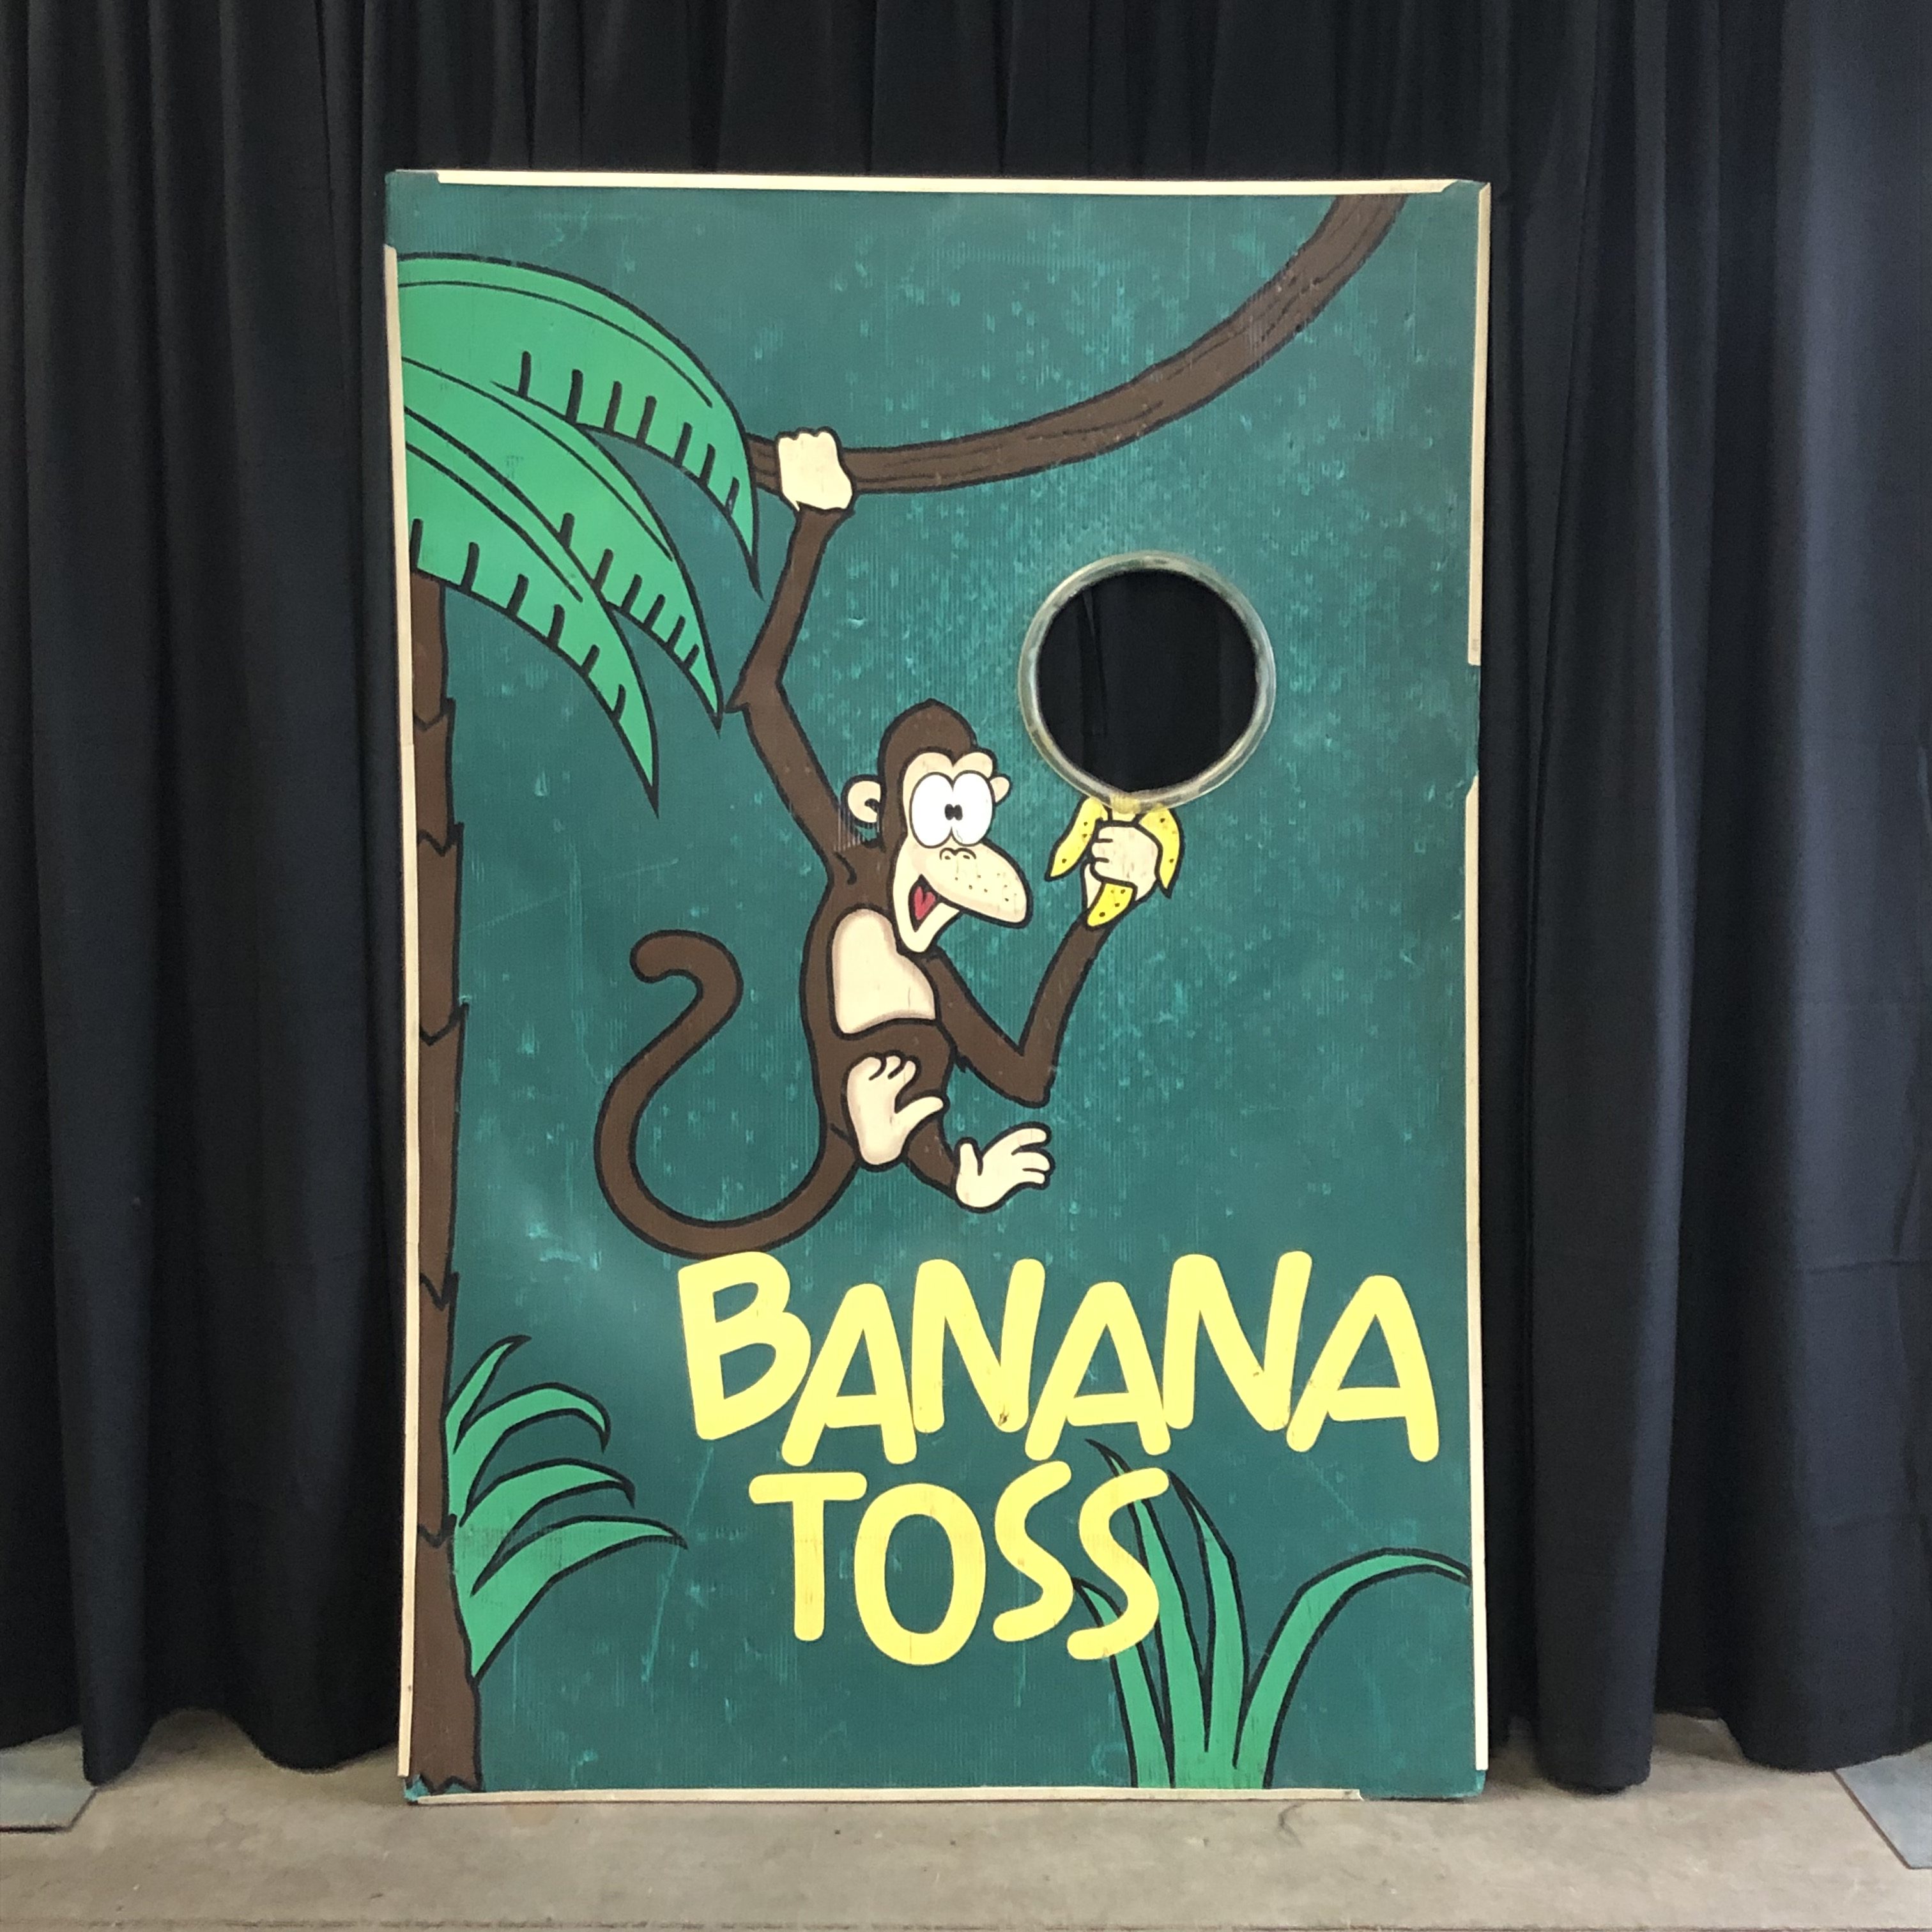 Banana Toss Image